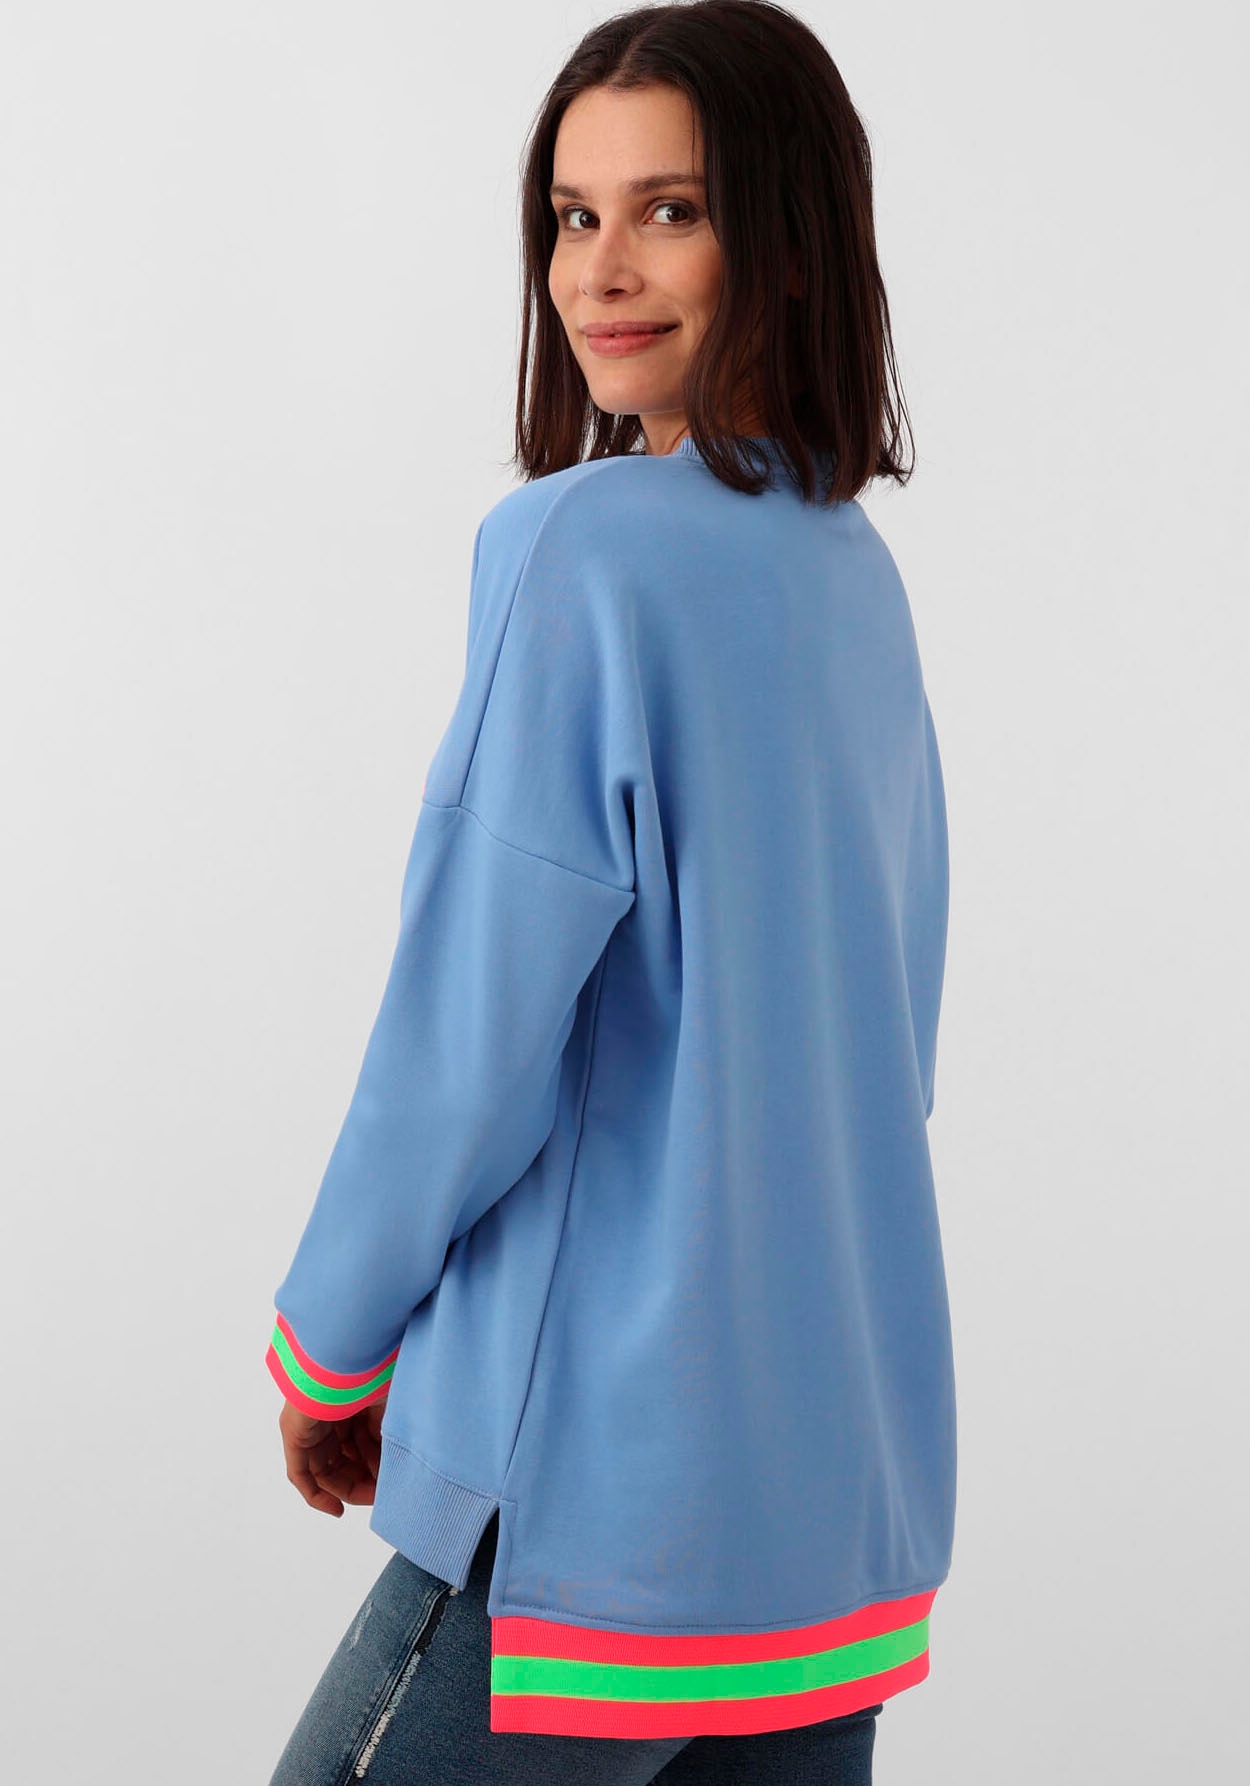 Zwillingsherz Sweatshirt »Dana«, mit V-Ausschnitt, Frontprint, Vokuhila Schnitt, neonfarben